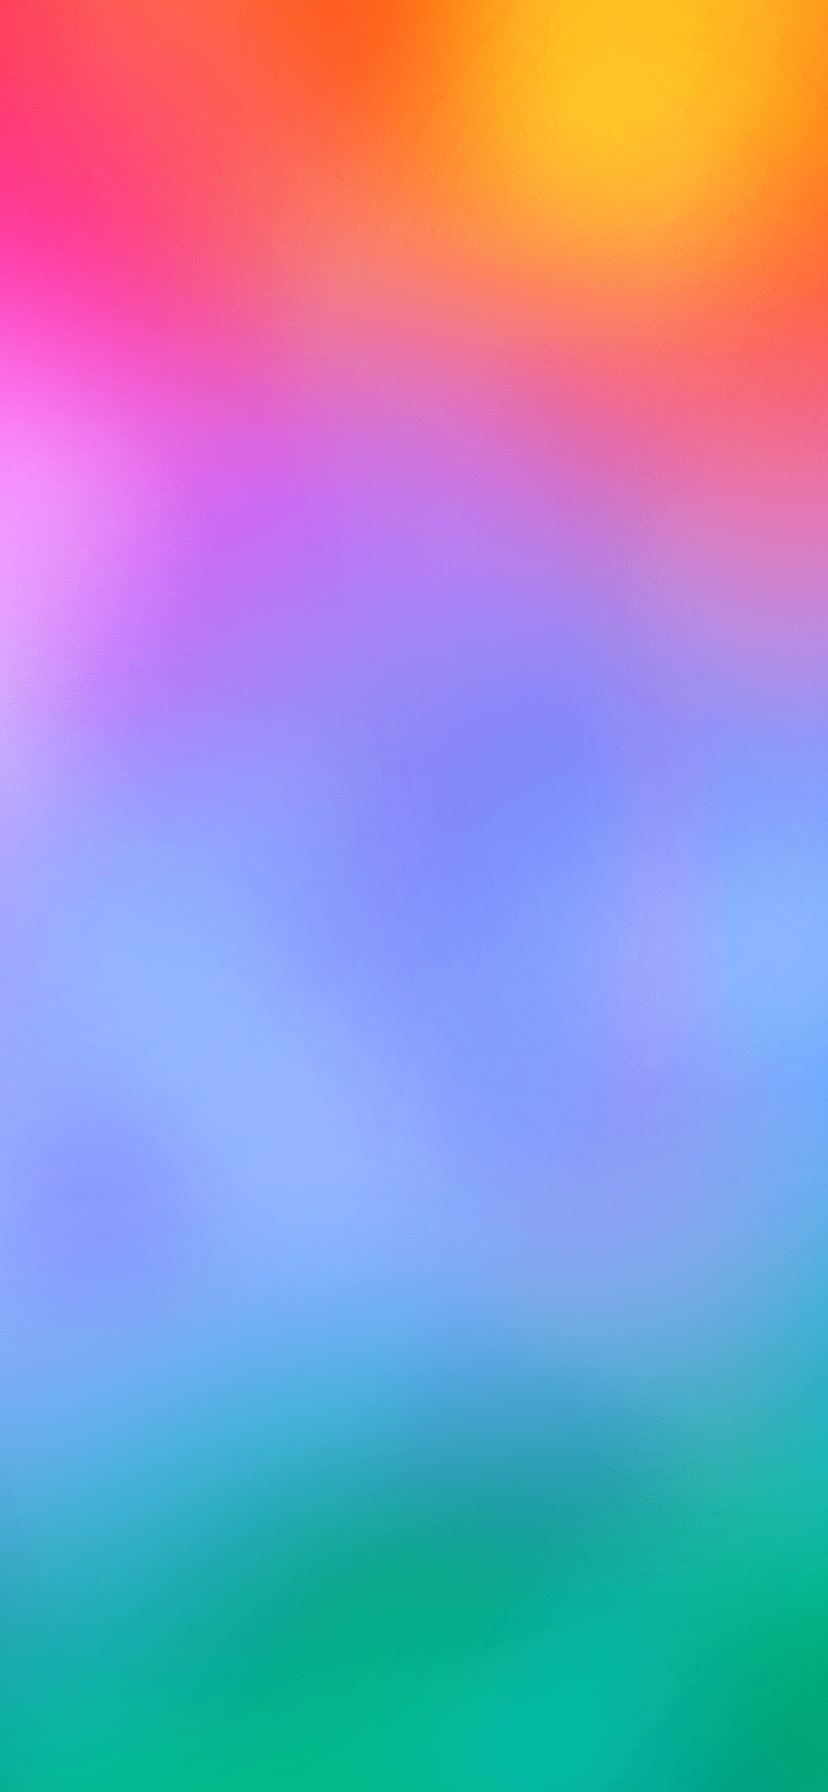 Free iPhone 11 Wallpaper Download 04 of 20 Rainbow Background Wallpaper. Wallpaper Download. High Resolution Wallpaper